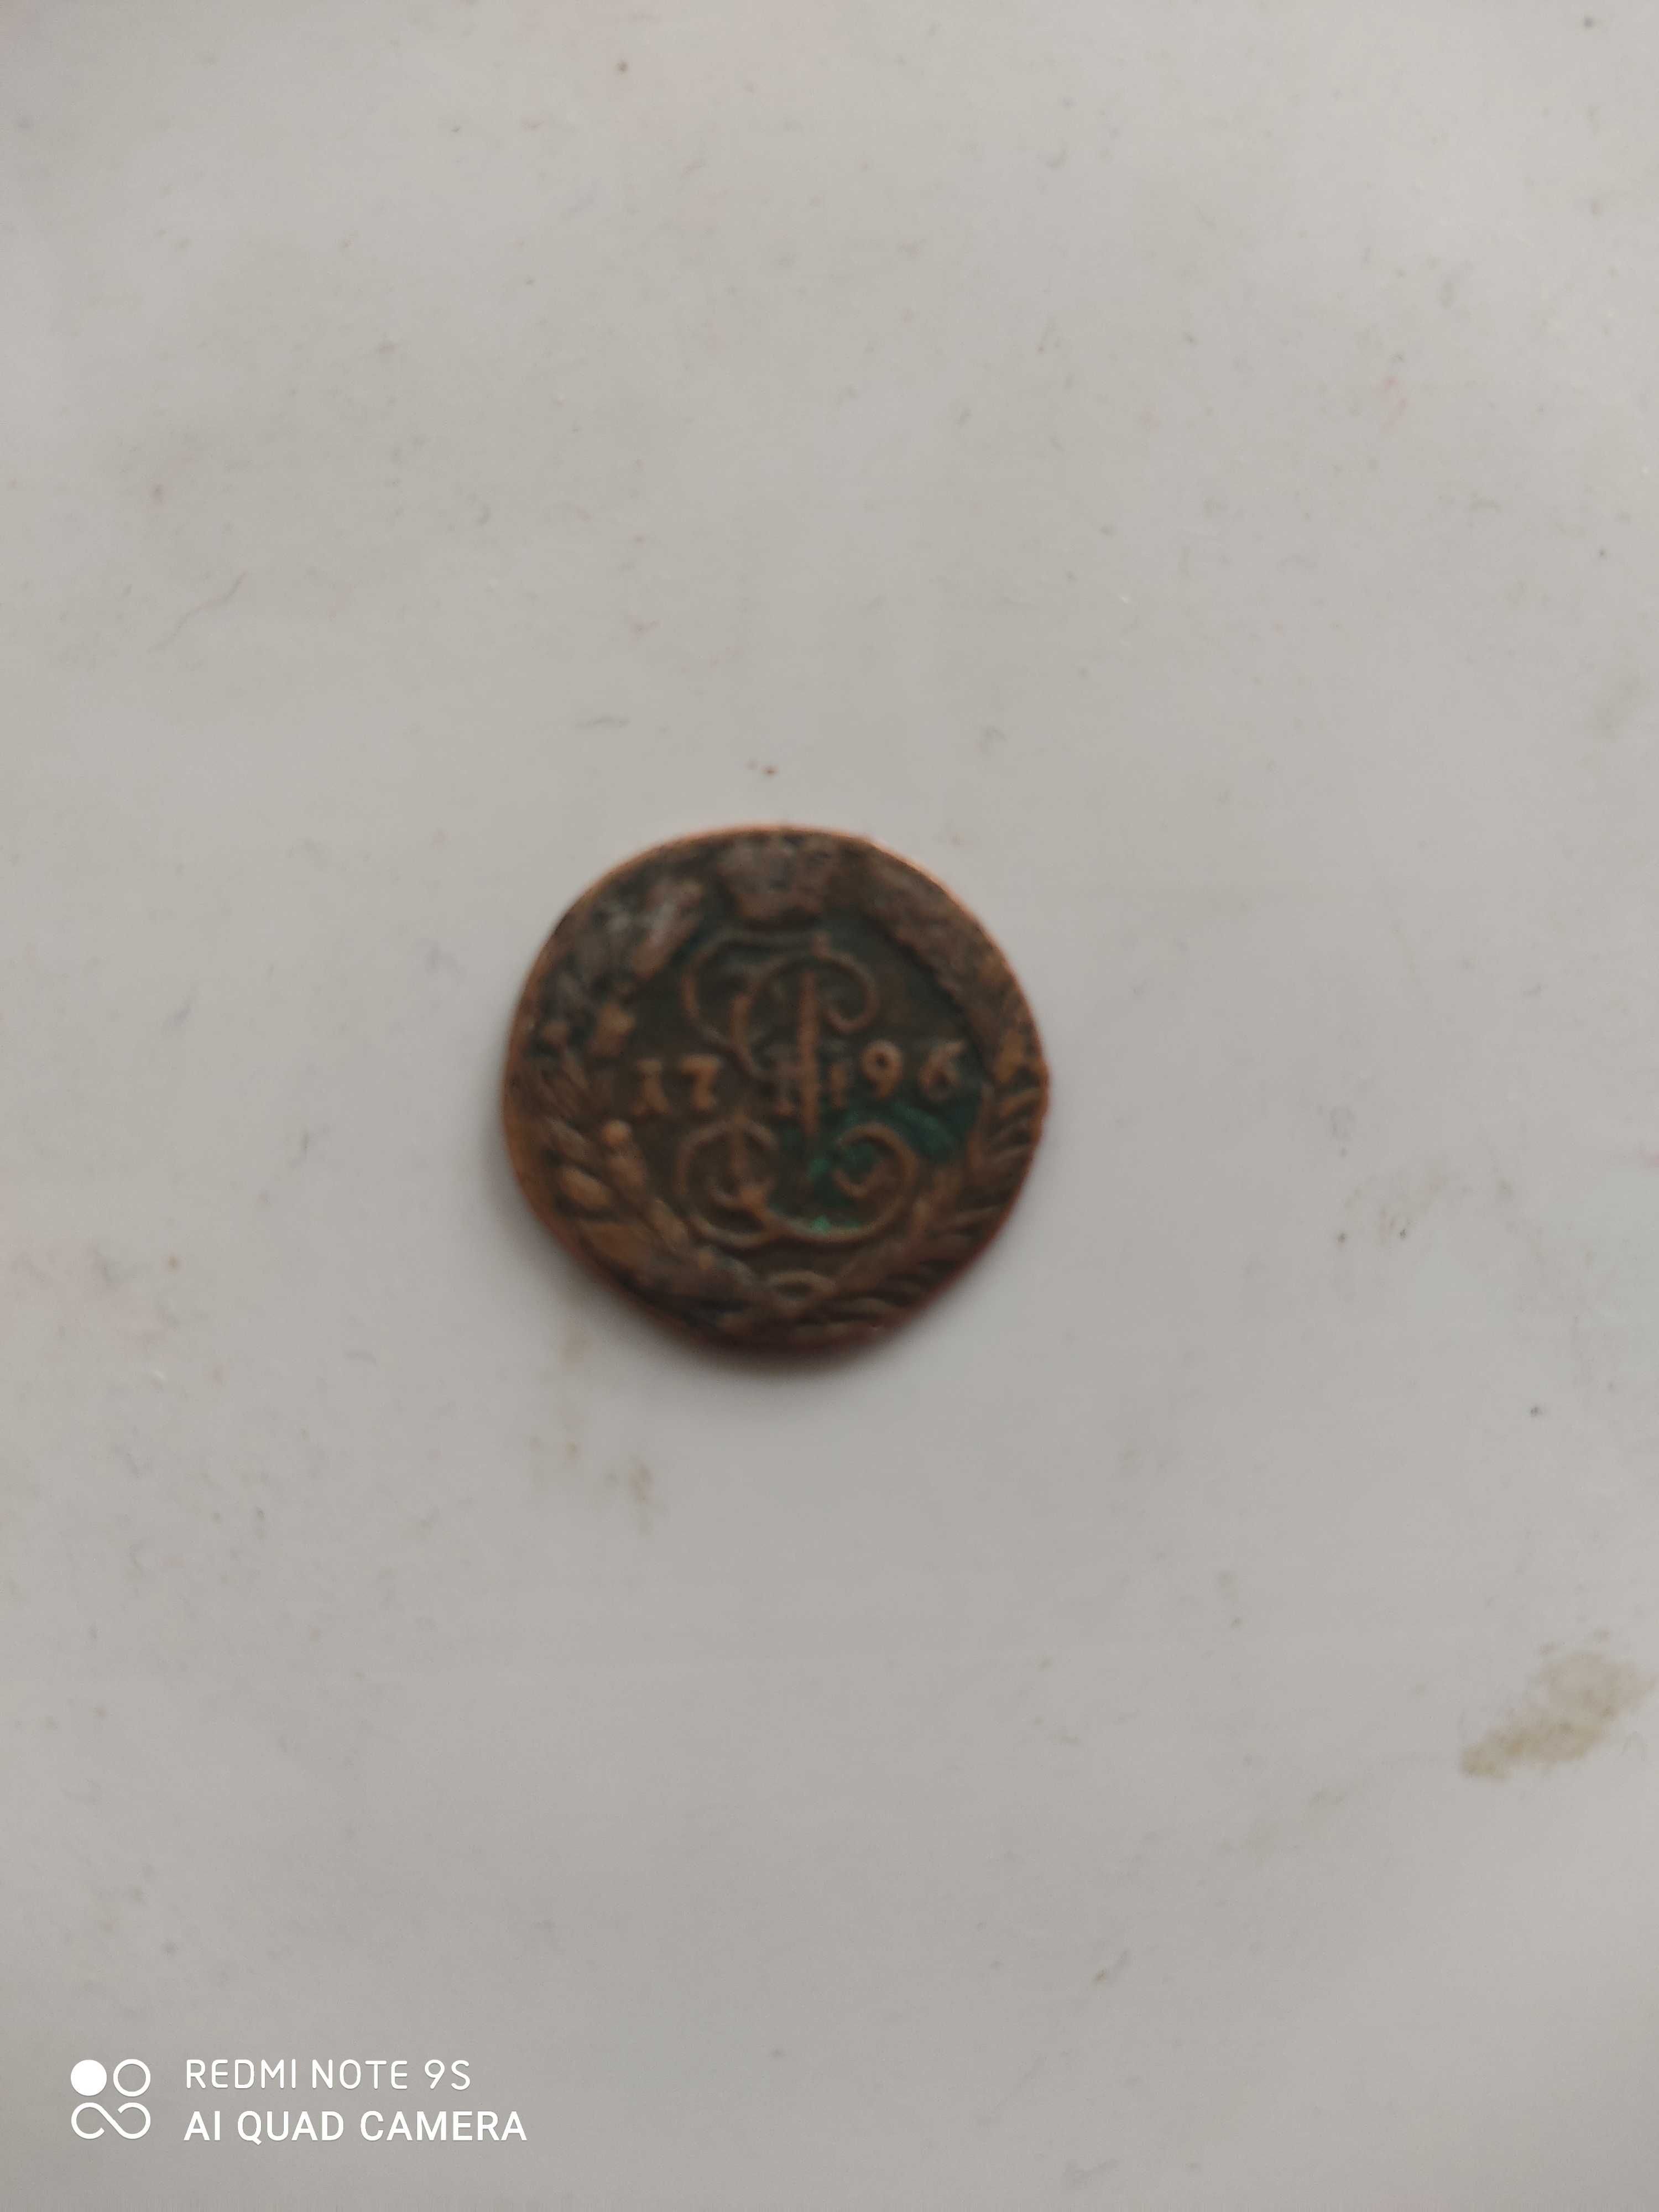 Продам монету полушку 1796года на монете изображен Георгия победоносец